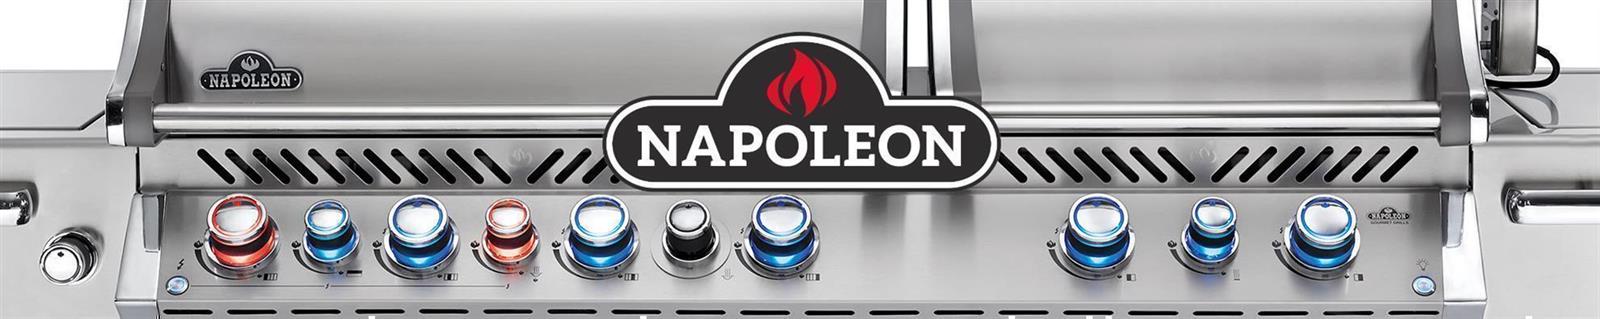 Napoleon - BBQ-Handtuch